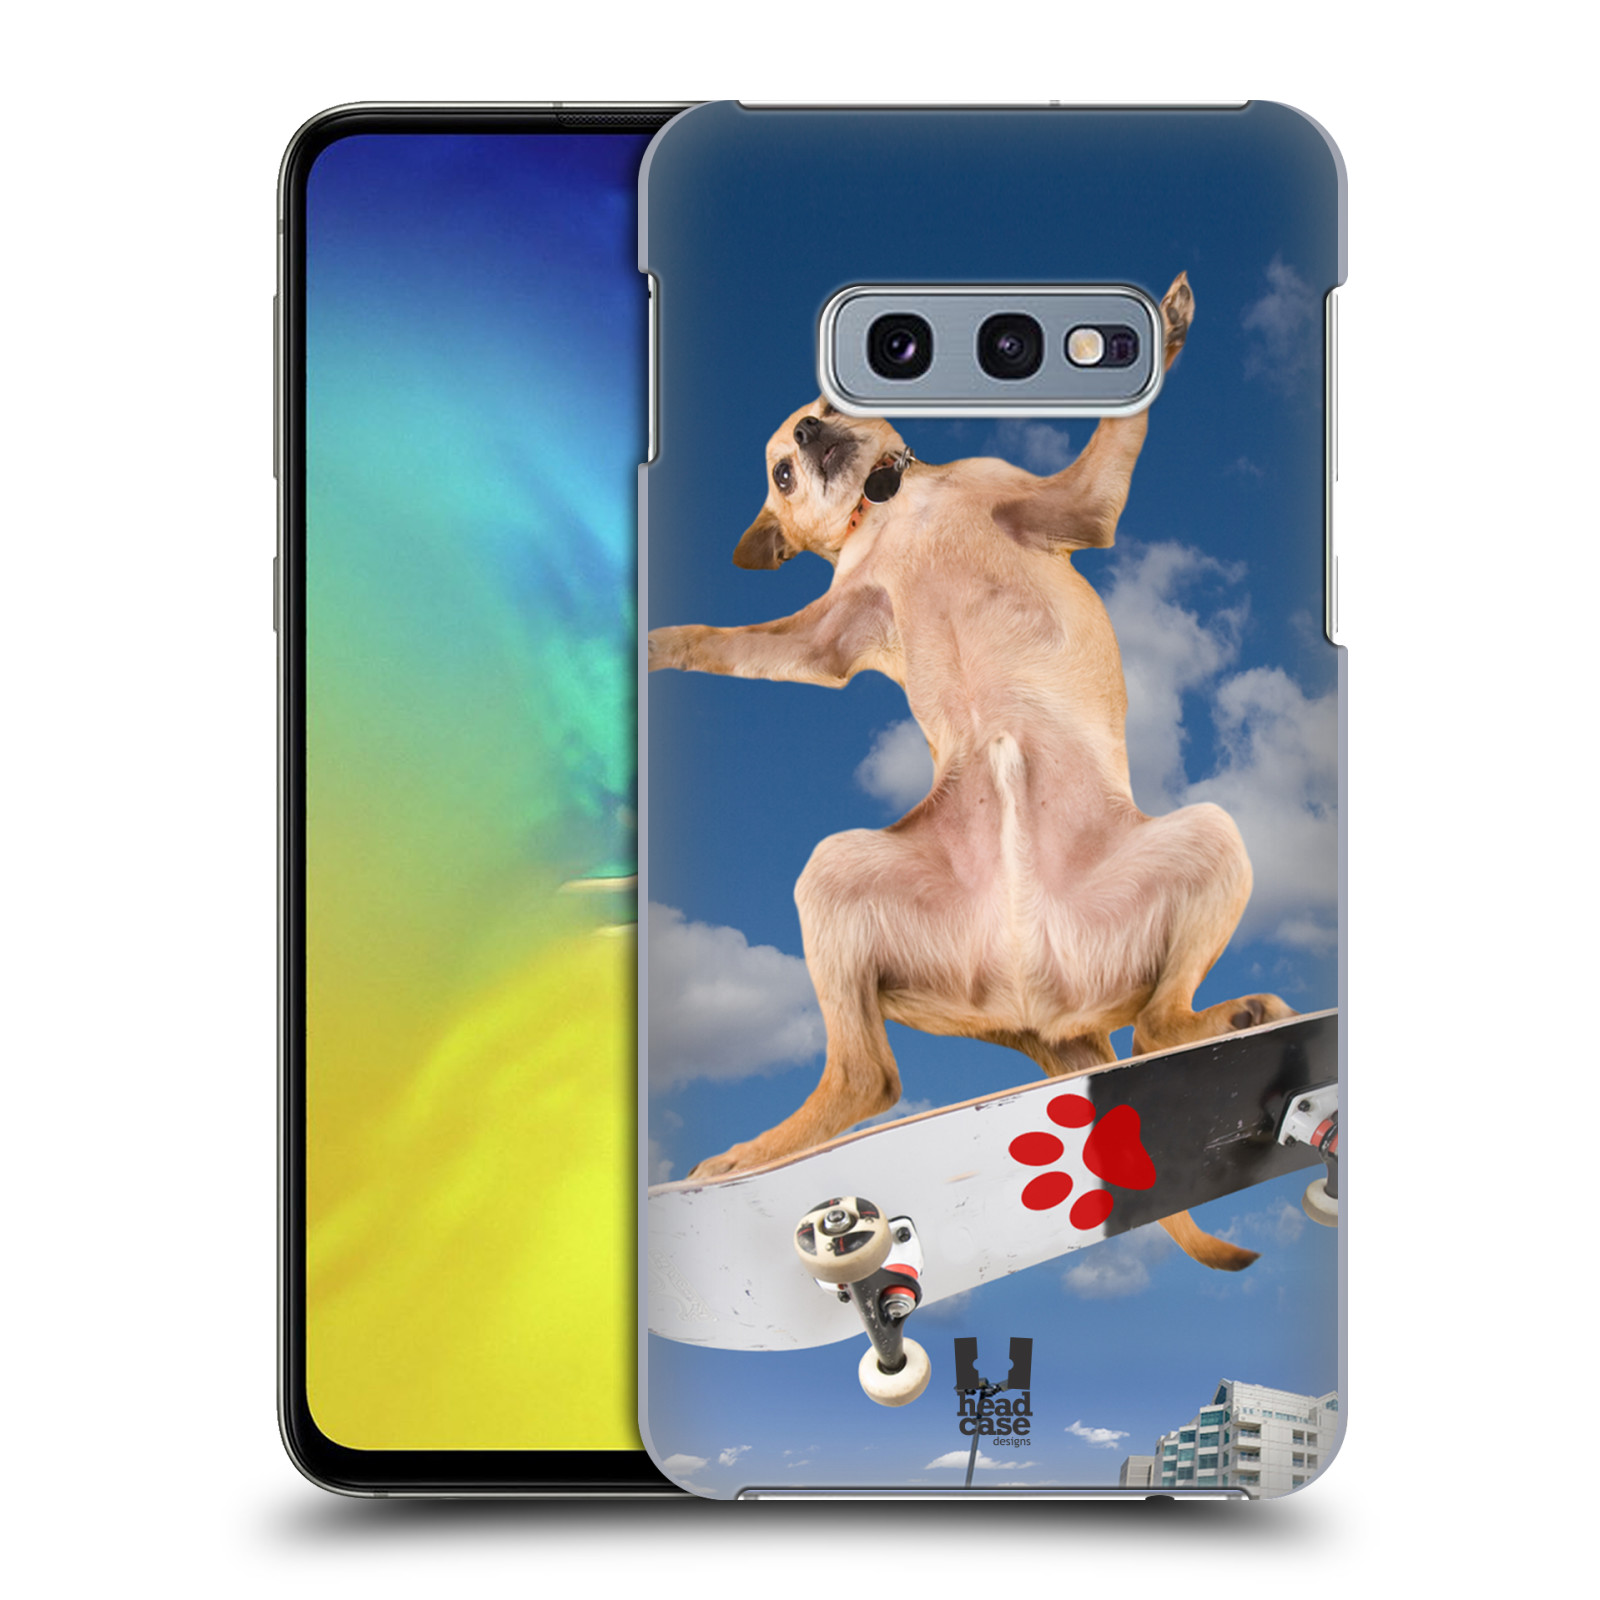 Pouzdro na mobil Samsung Galaxy S10e - HEAD CASE - vzor Legrační zvířátka pejsek skateboard